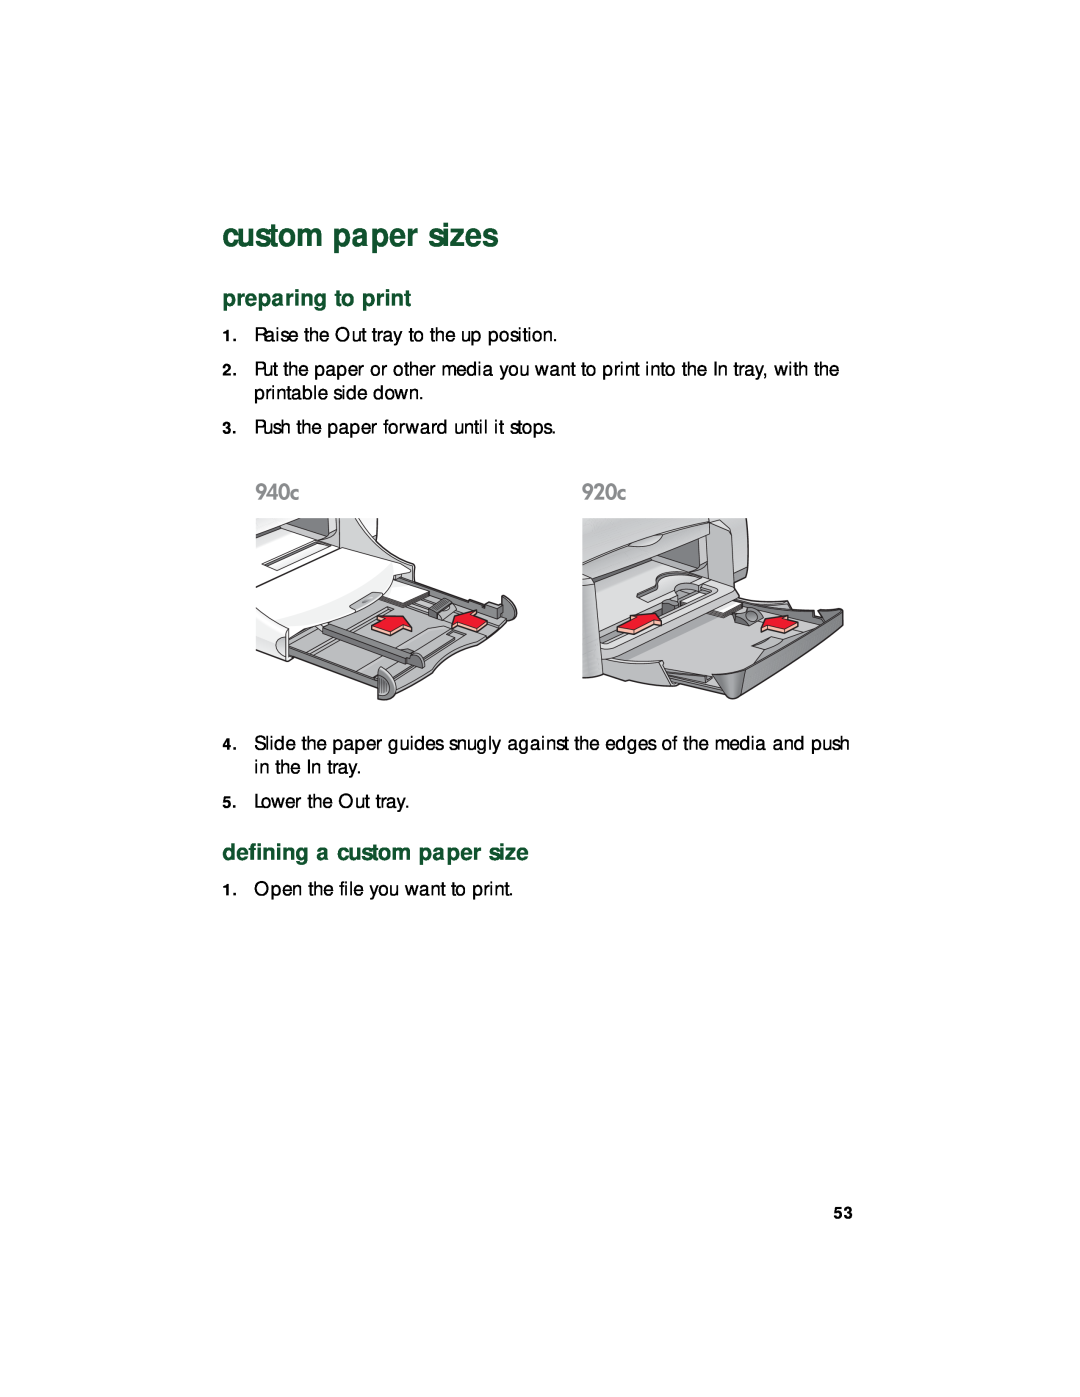 HP 948c, 920c, 940c manual custom paper sizes, defining a custom paper size, preparing to print 